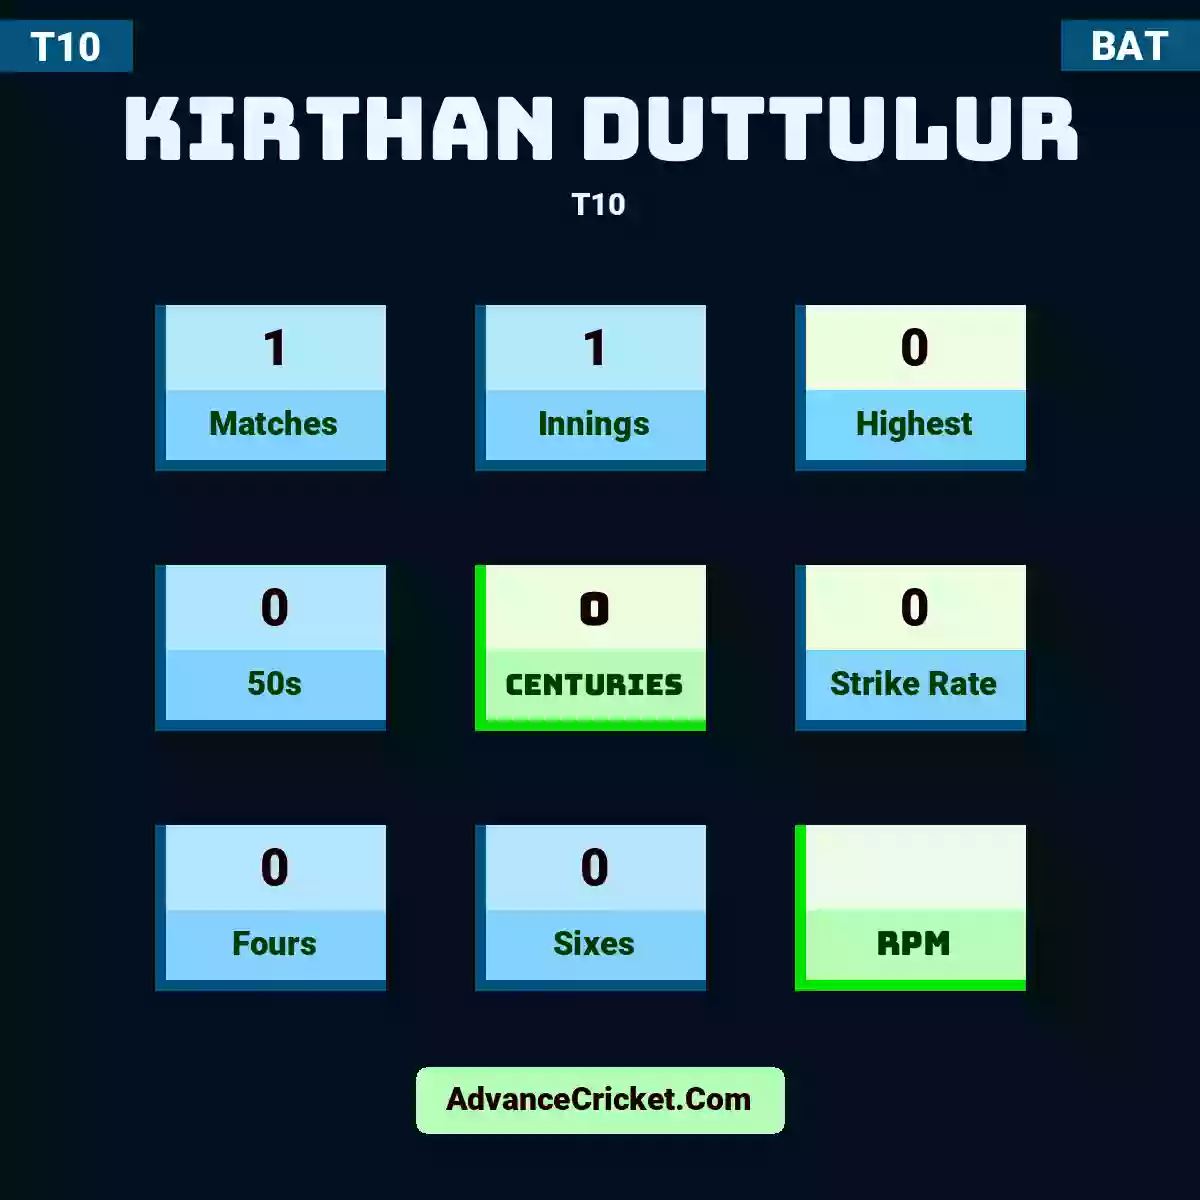 Kirthan Duttulur T10 , Kirthan Duttulur played 1 matches, scored 0 runs as highest, 0 half-centuries, and 0 centuries, with a strike rate of 0. K.Duttulur hit 0 fours and 0 sixes.